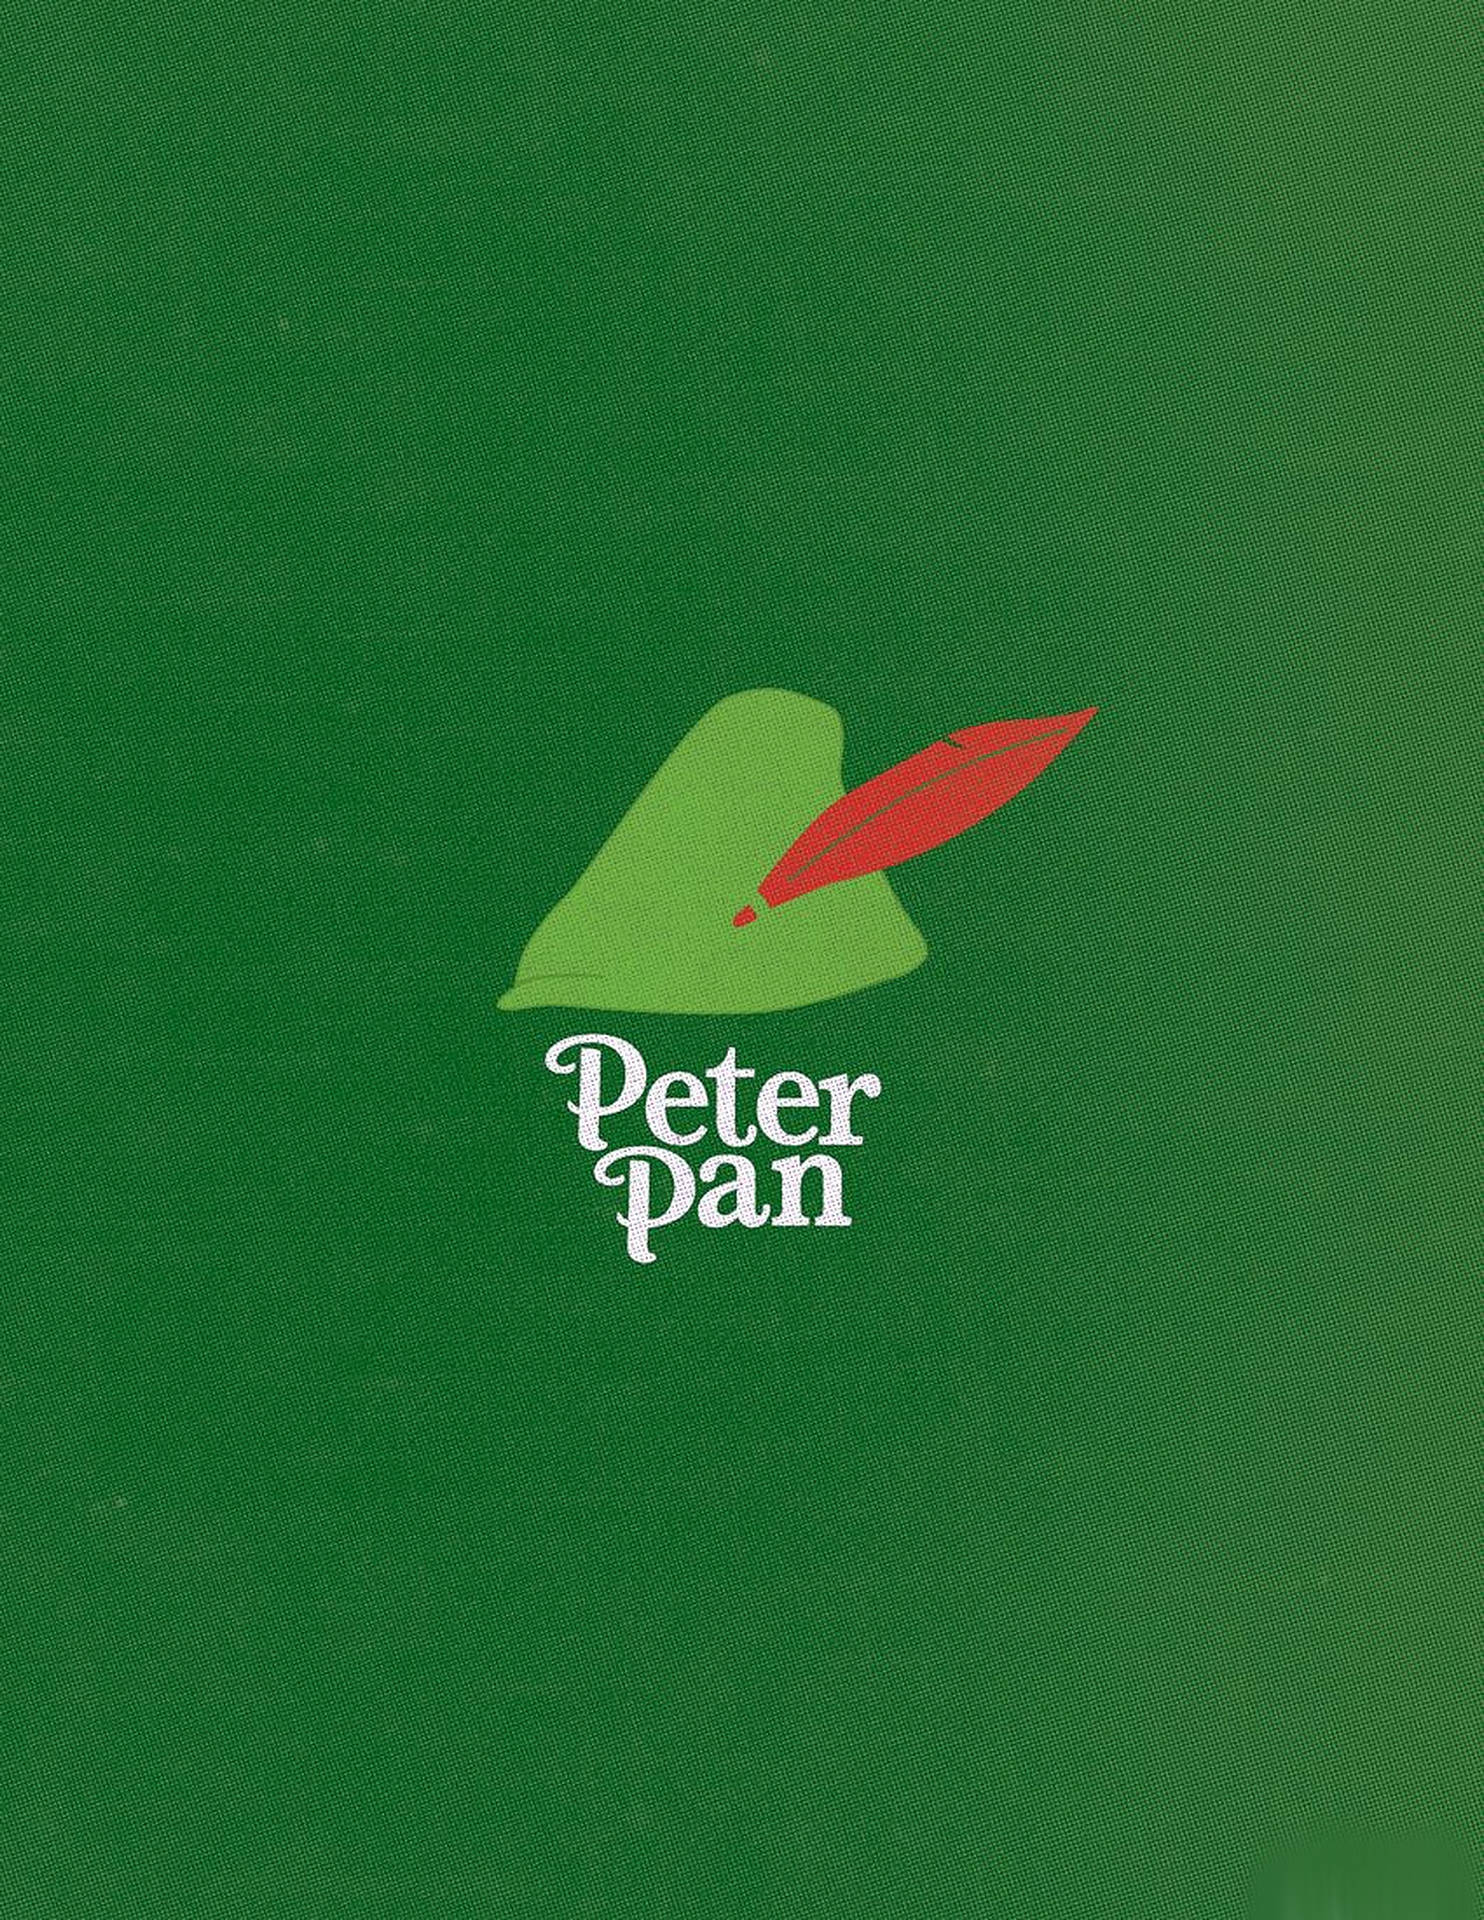 Peter Pan Green Hat Background